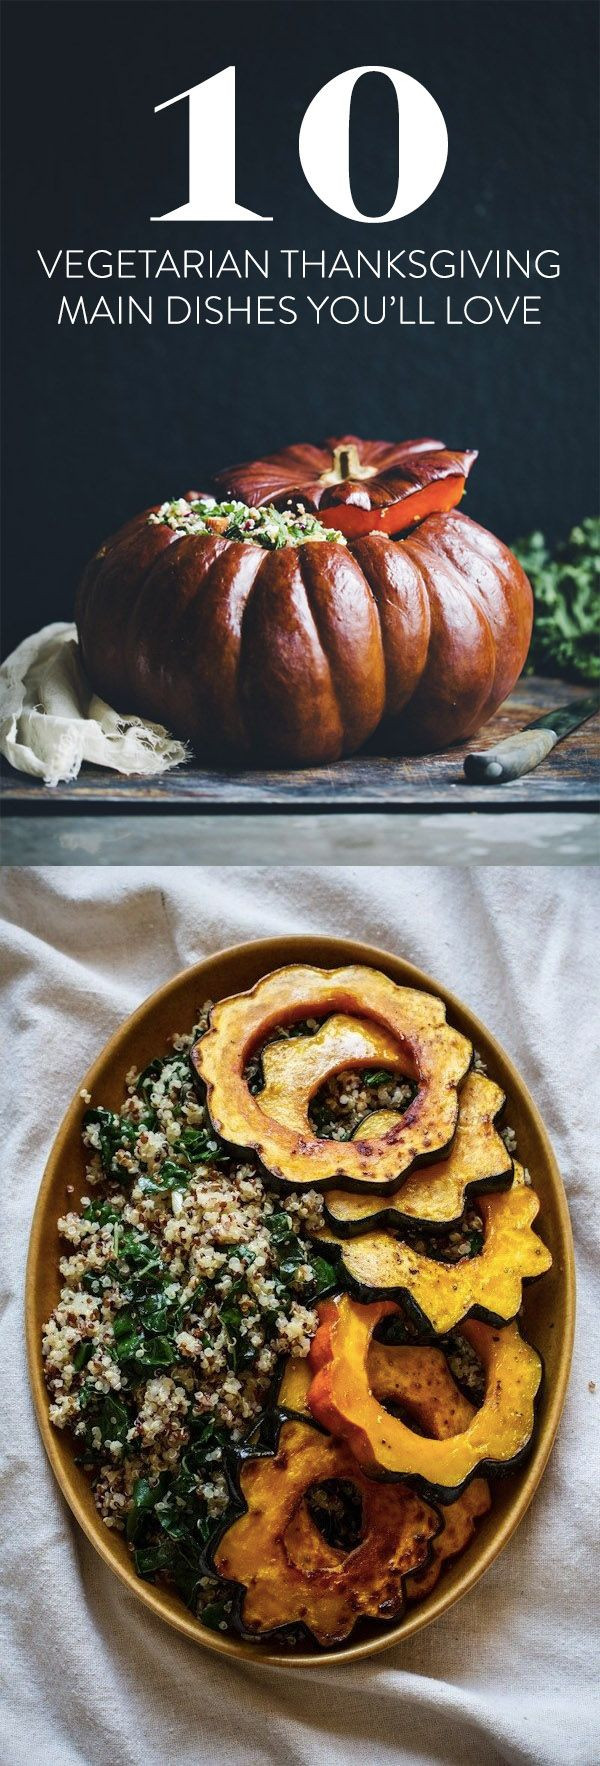 Vegetarian Thanksgiving Main Course
 Best 25 Thanksgiving ve ables ideas on Pinterest